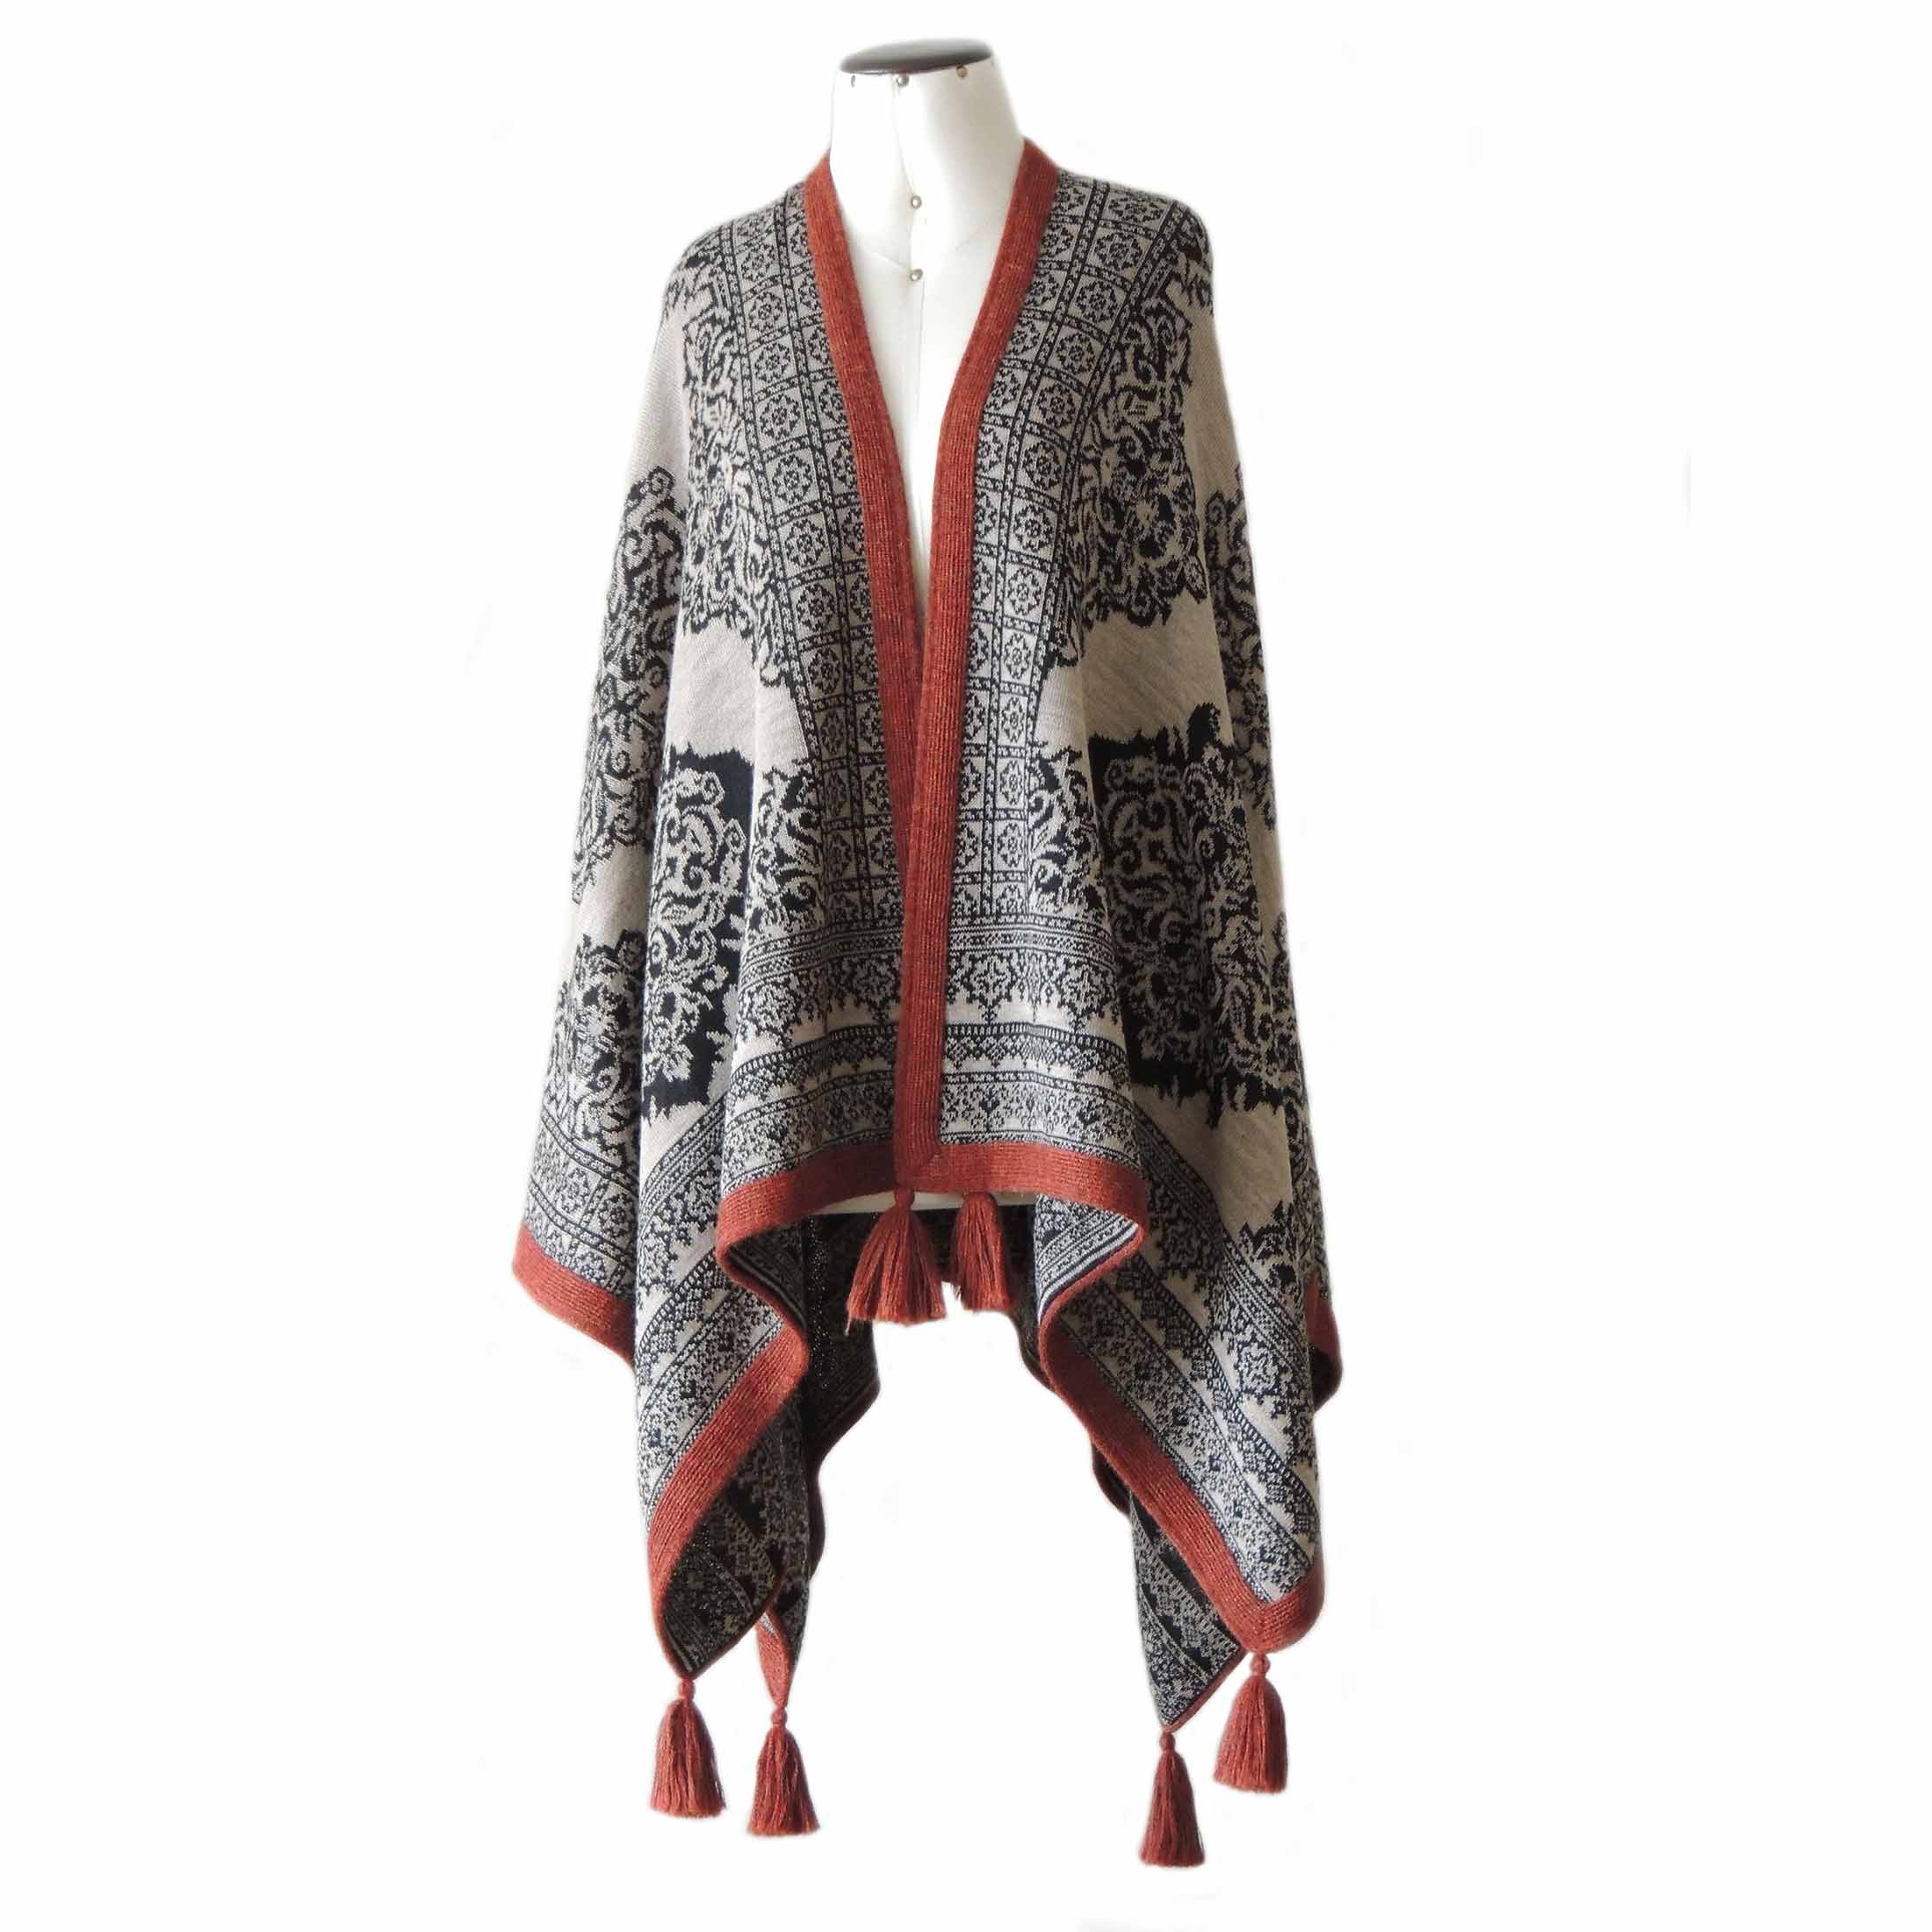 PopsFL knitwear wholesale Women's ruana - wrap reversible jacquard knitted with pattern and tassels 100% baby alpaca.